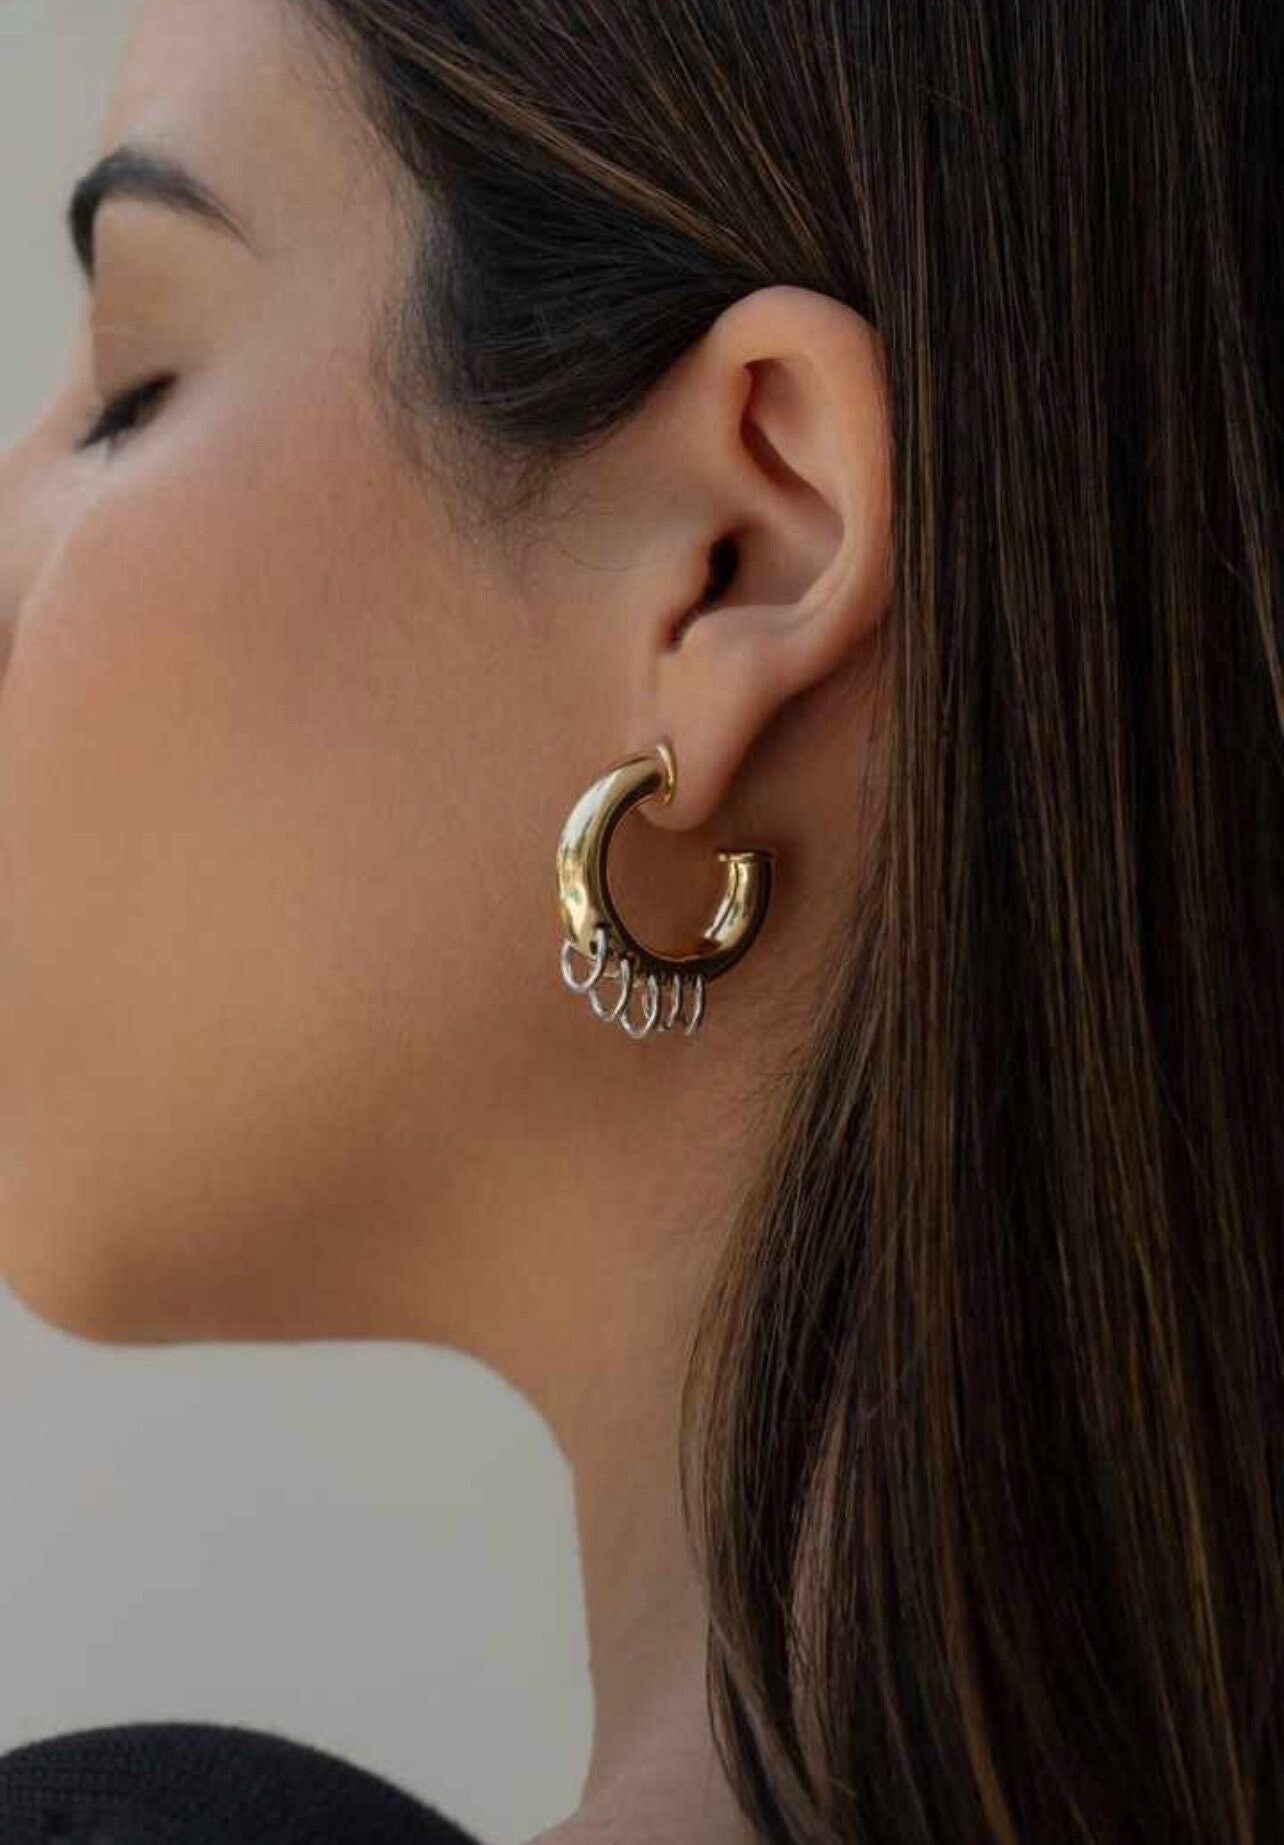 Geometric Asymmetric Key Lock Dangle Hoop Earrings Simple Gold Silver  Plated Big Round Circle Drop Stud Earrings for Women Girls